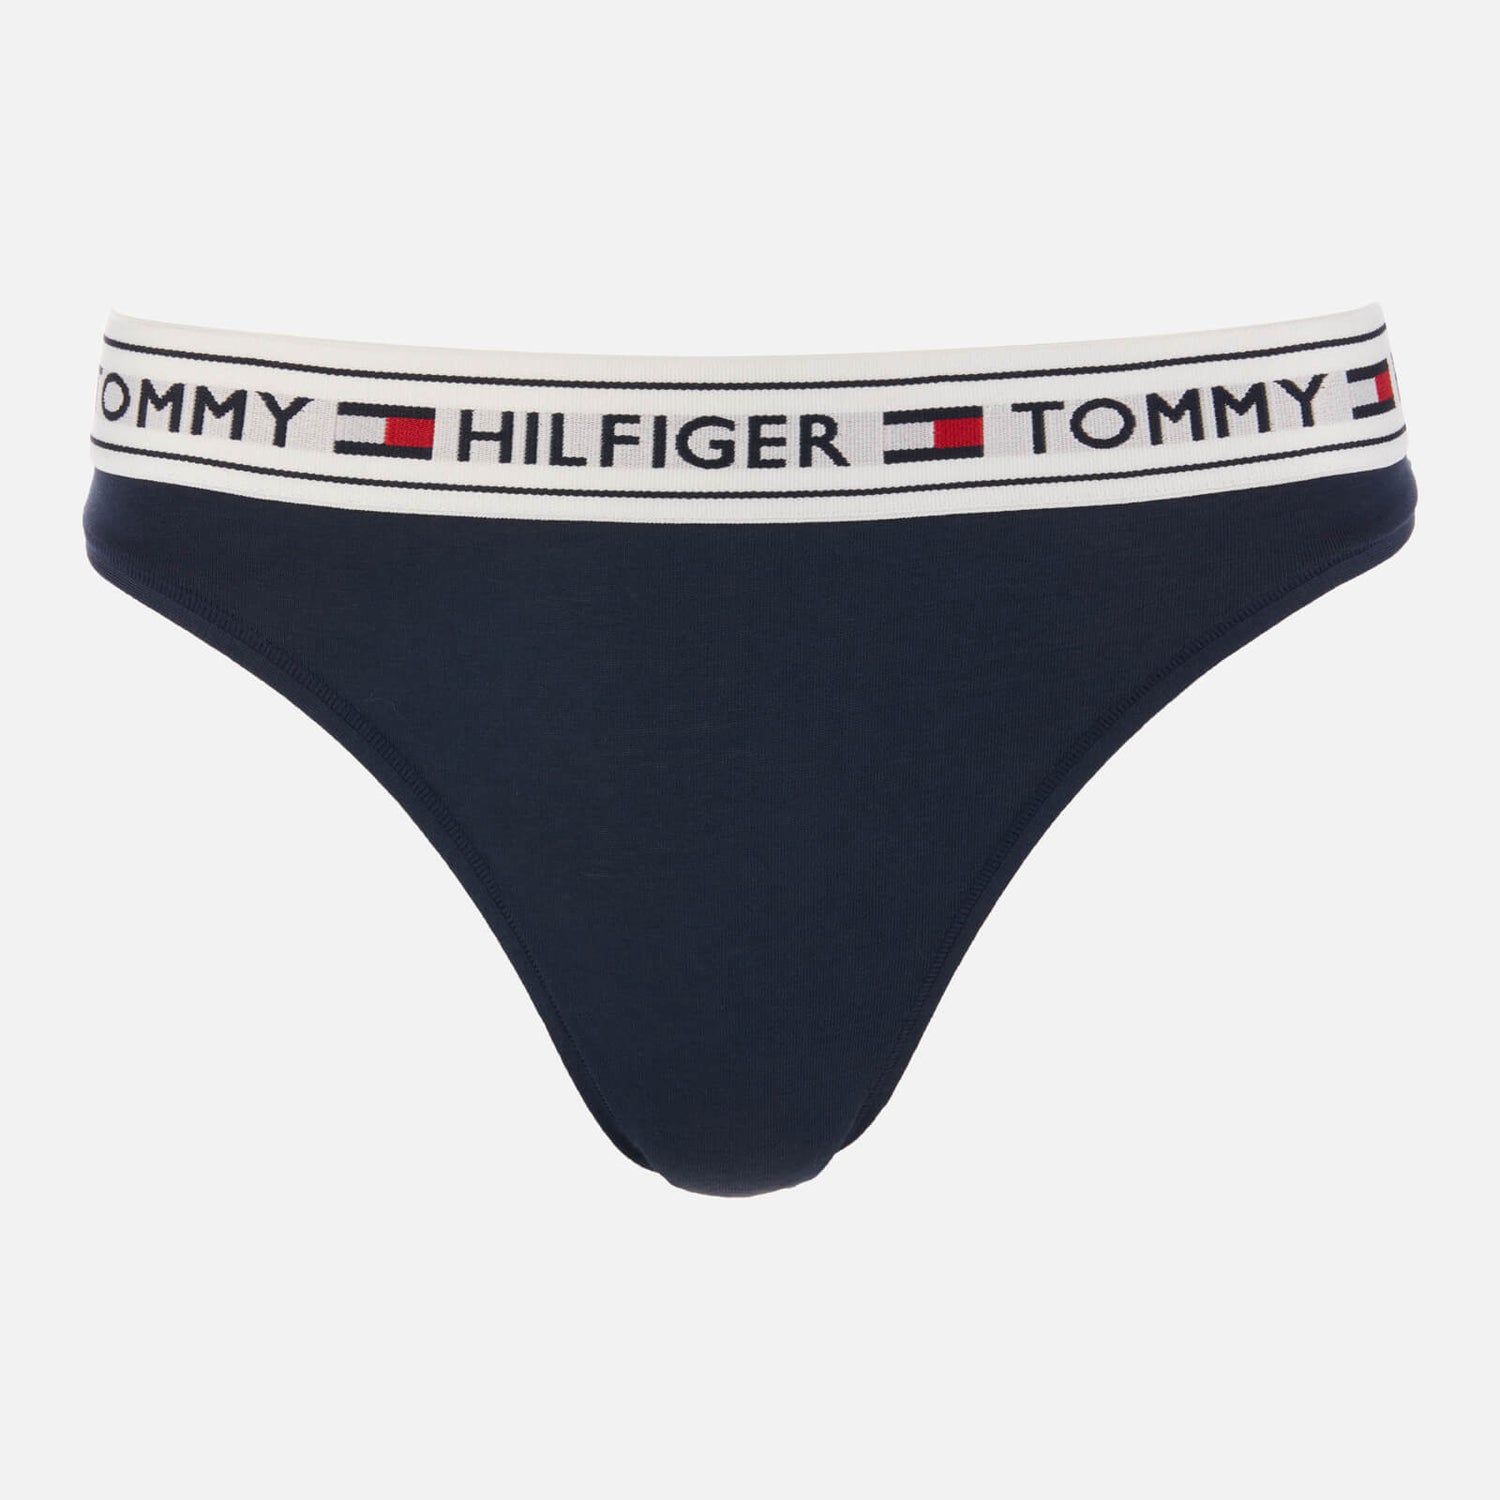 Tommy Hilfiger Women's Brazilian Briefs - Navy Blazer | TheHut.com